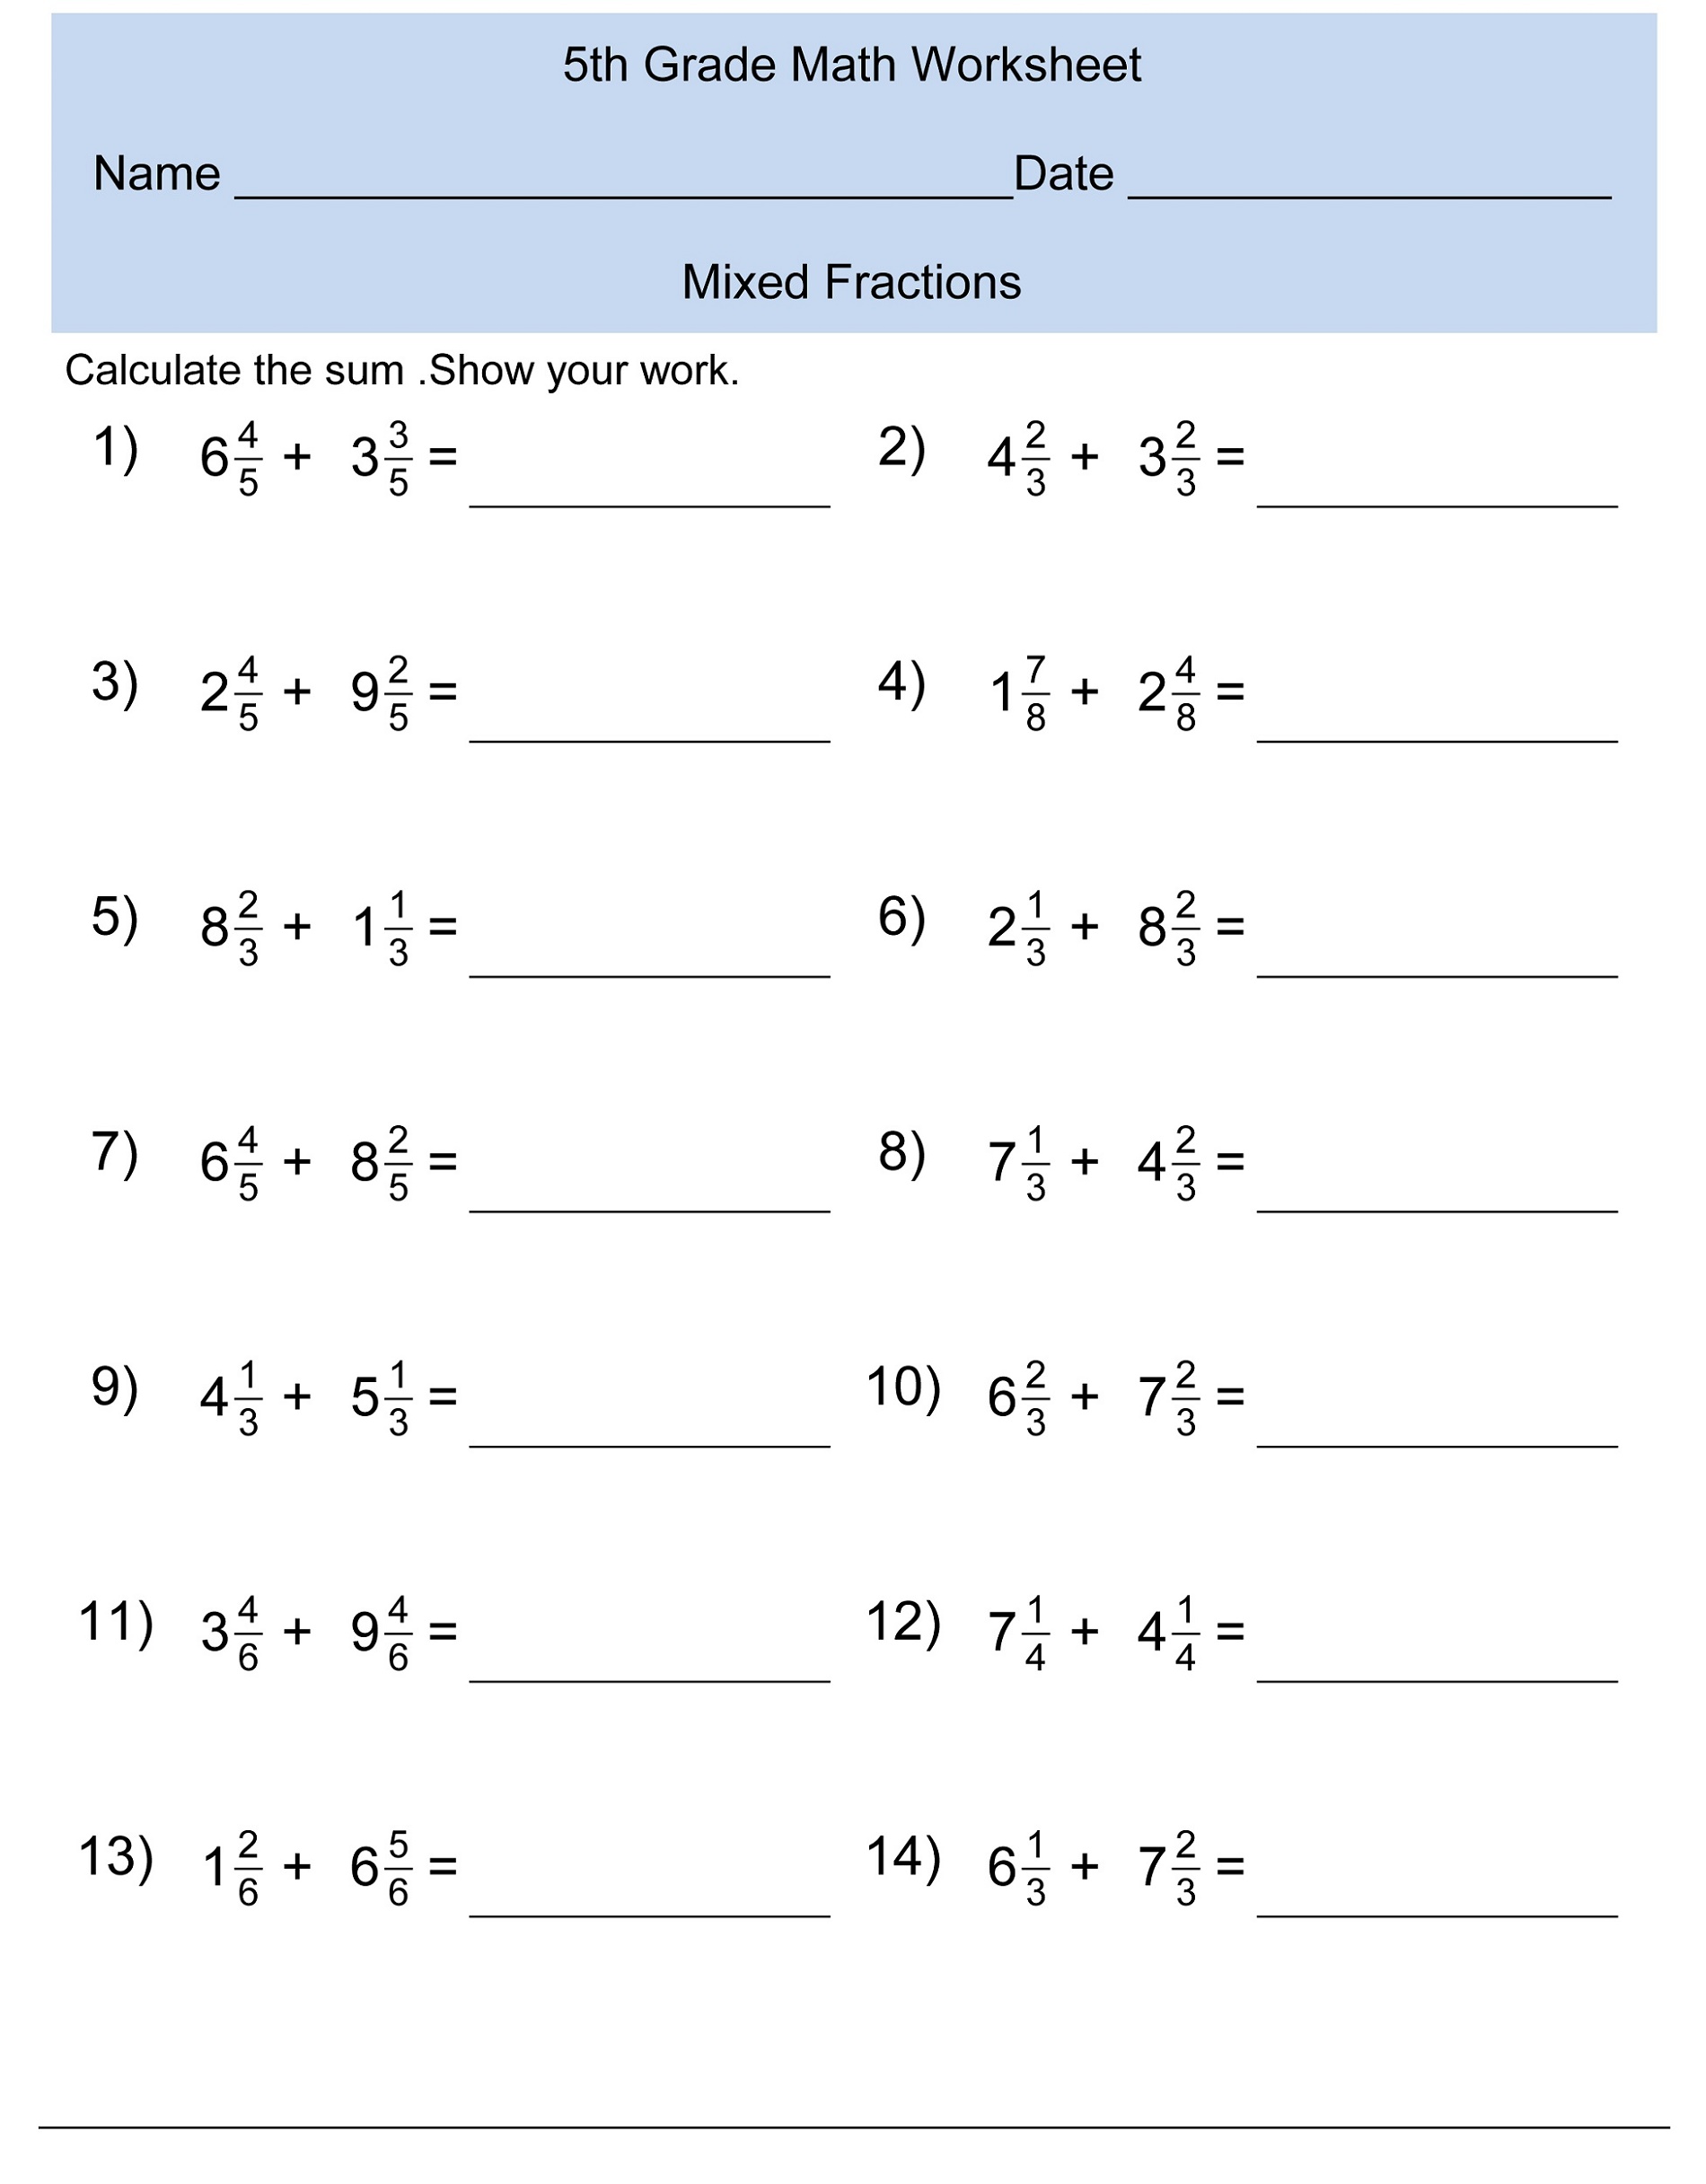 5th-Grade-Math-Worksheets-Mixed-Fraction